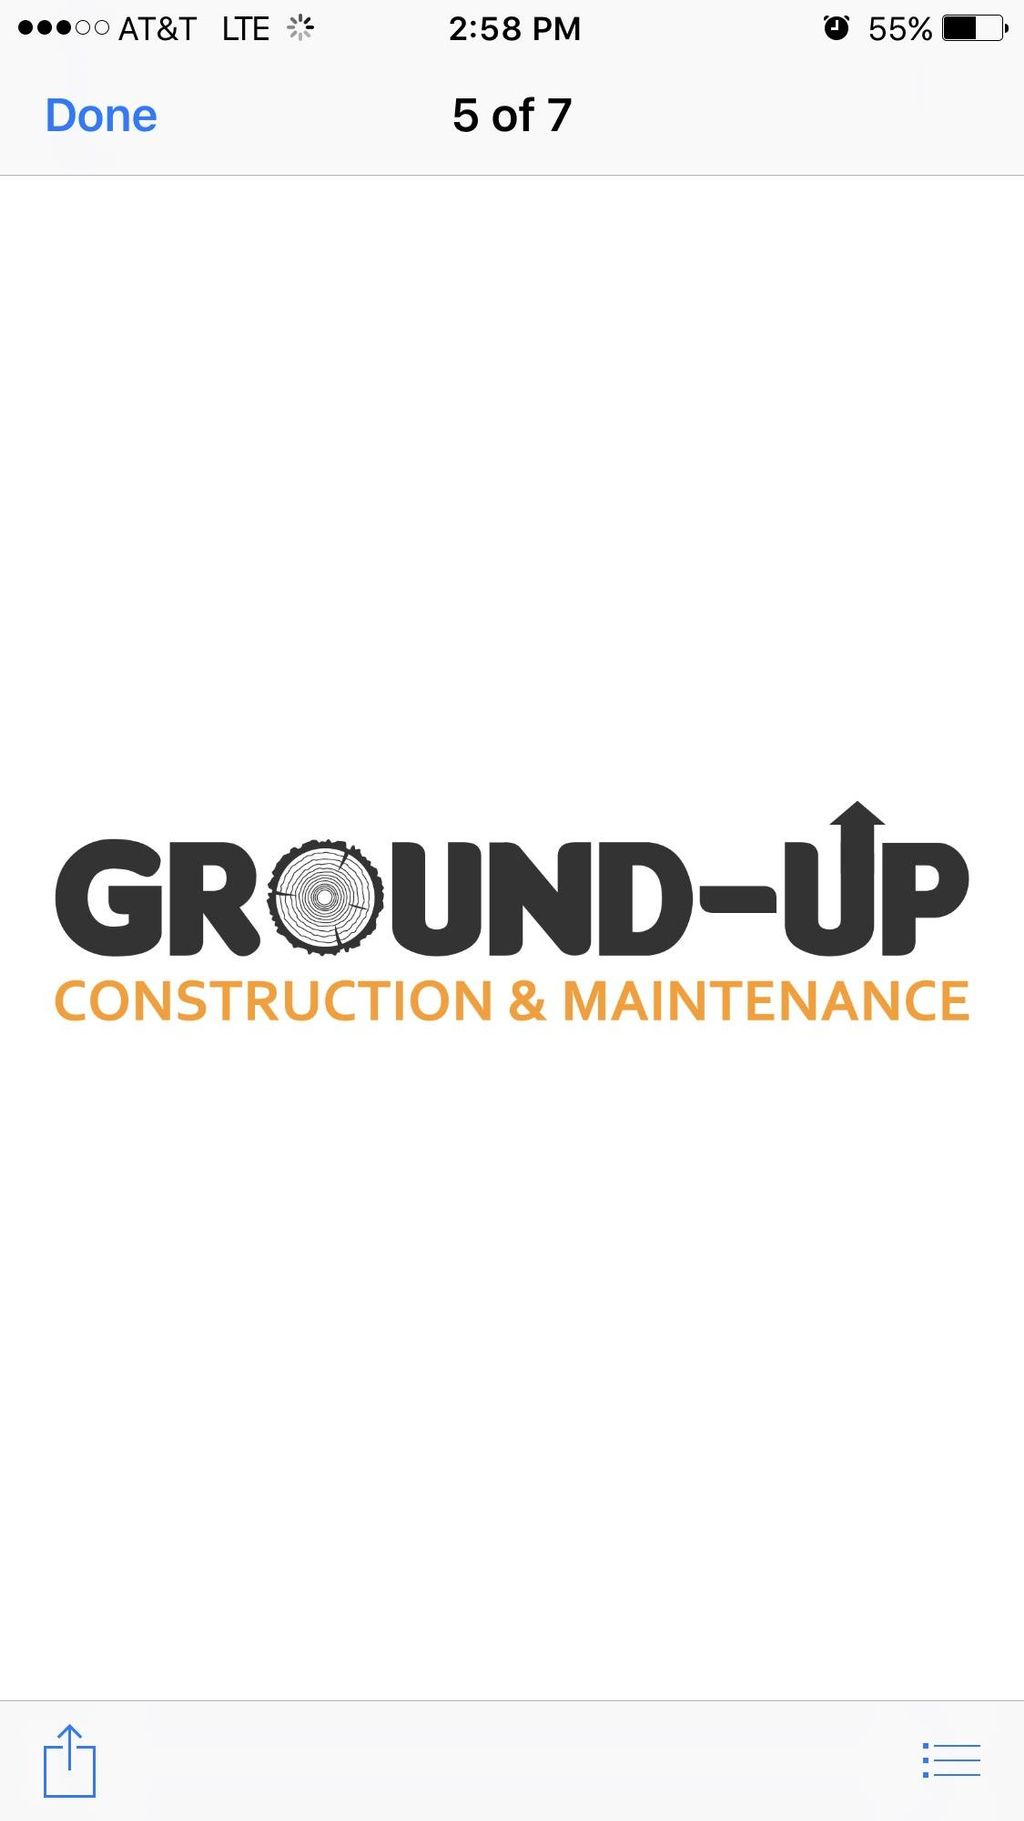 Ground-Up Construction & Maintenance